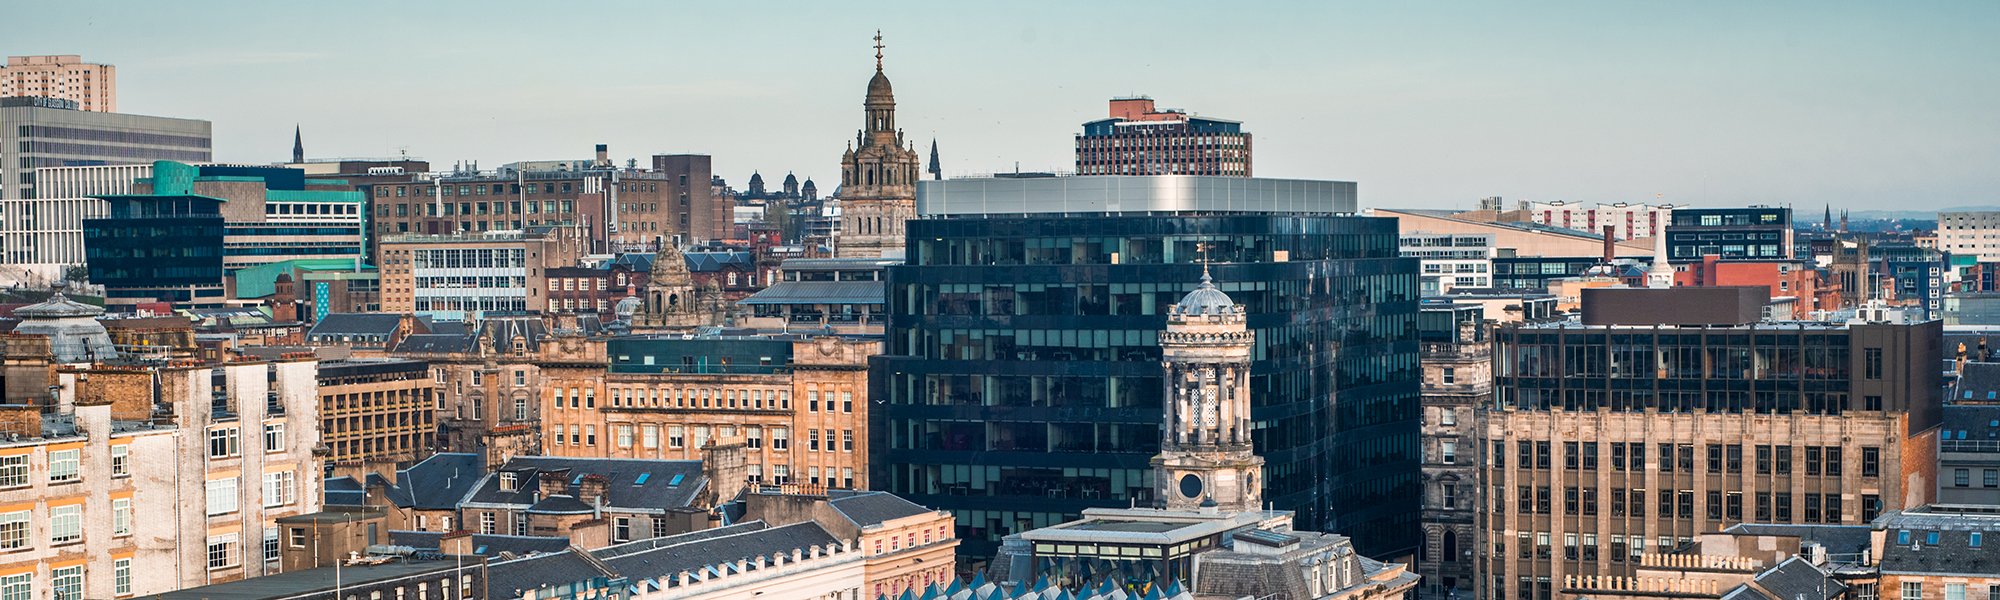 Aerial view of Glasgow City Centre